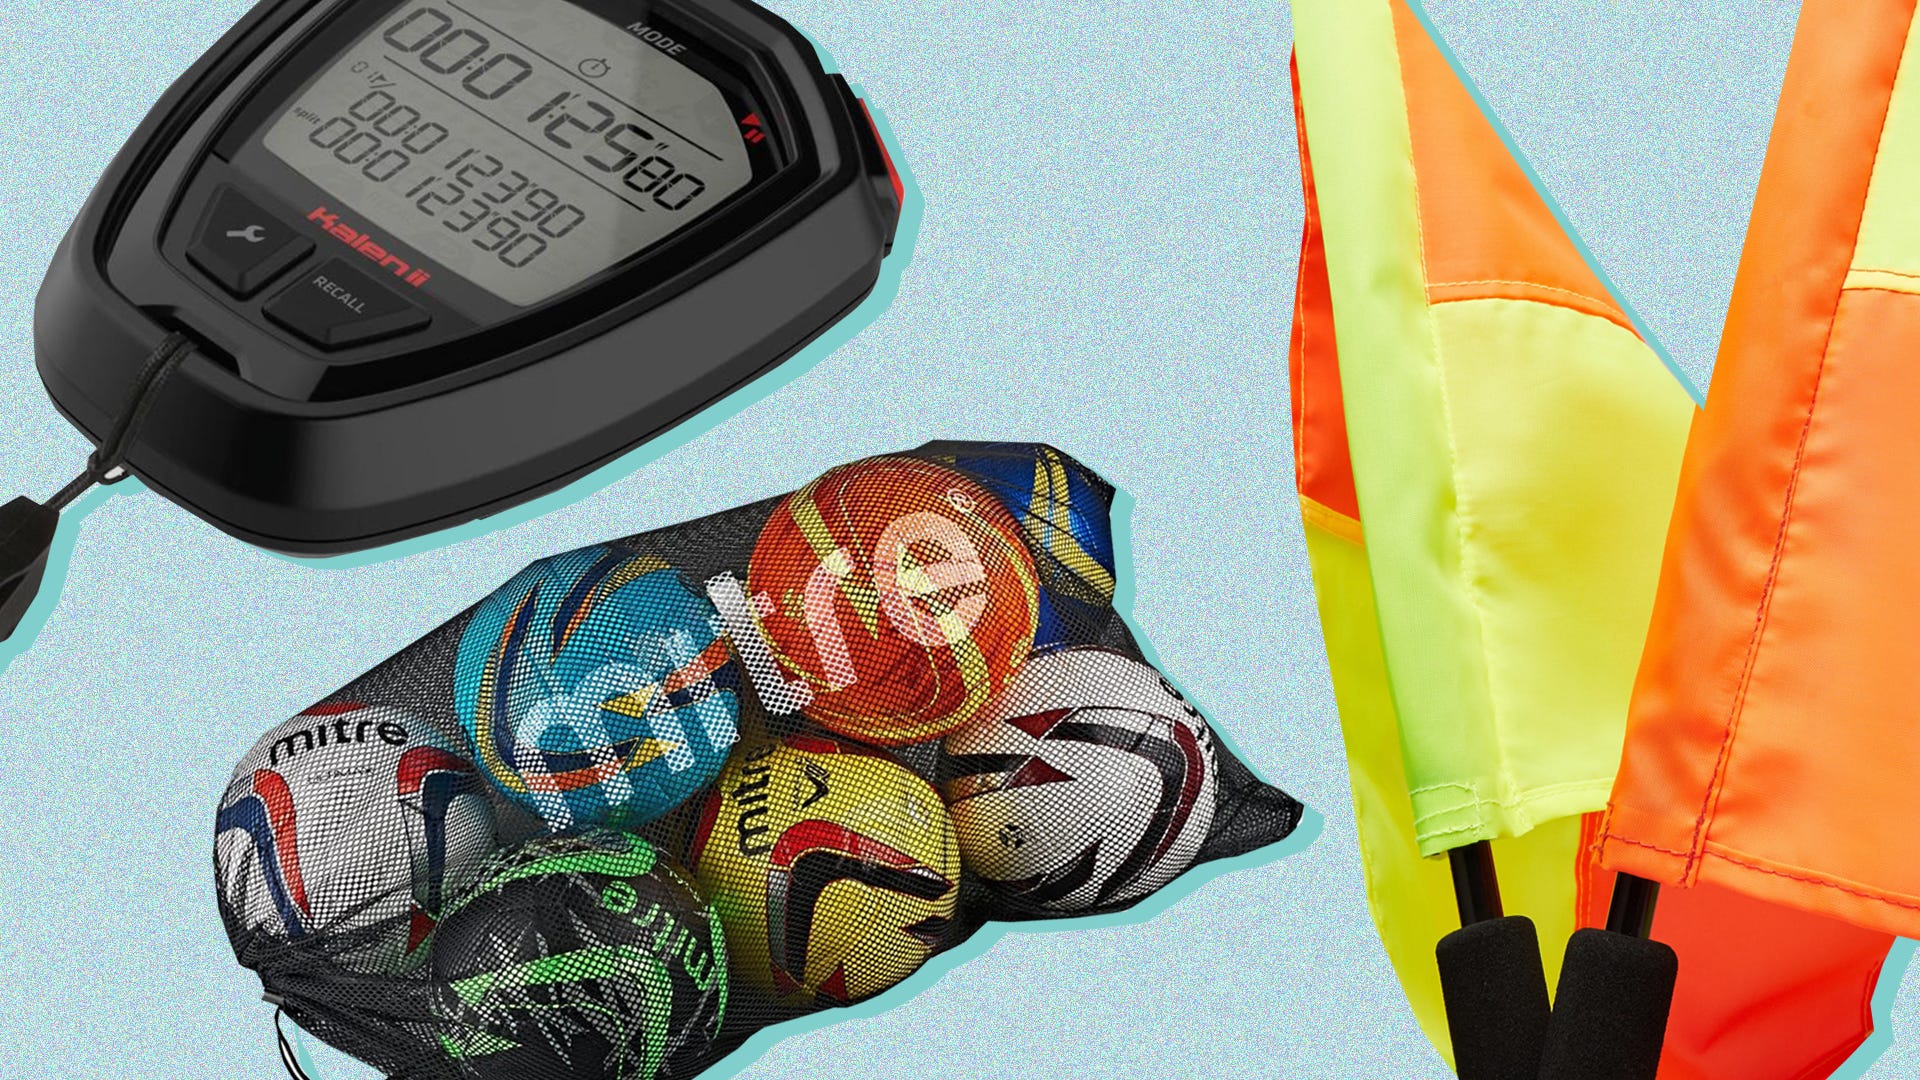 5 Pc Kit FS Details about   Soccer Football Pro Training Kit Ideal For Training Wheelie Kit 